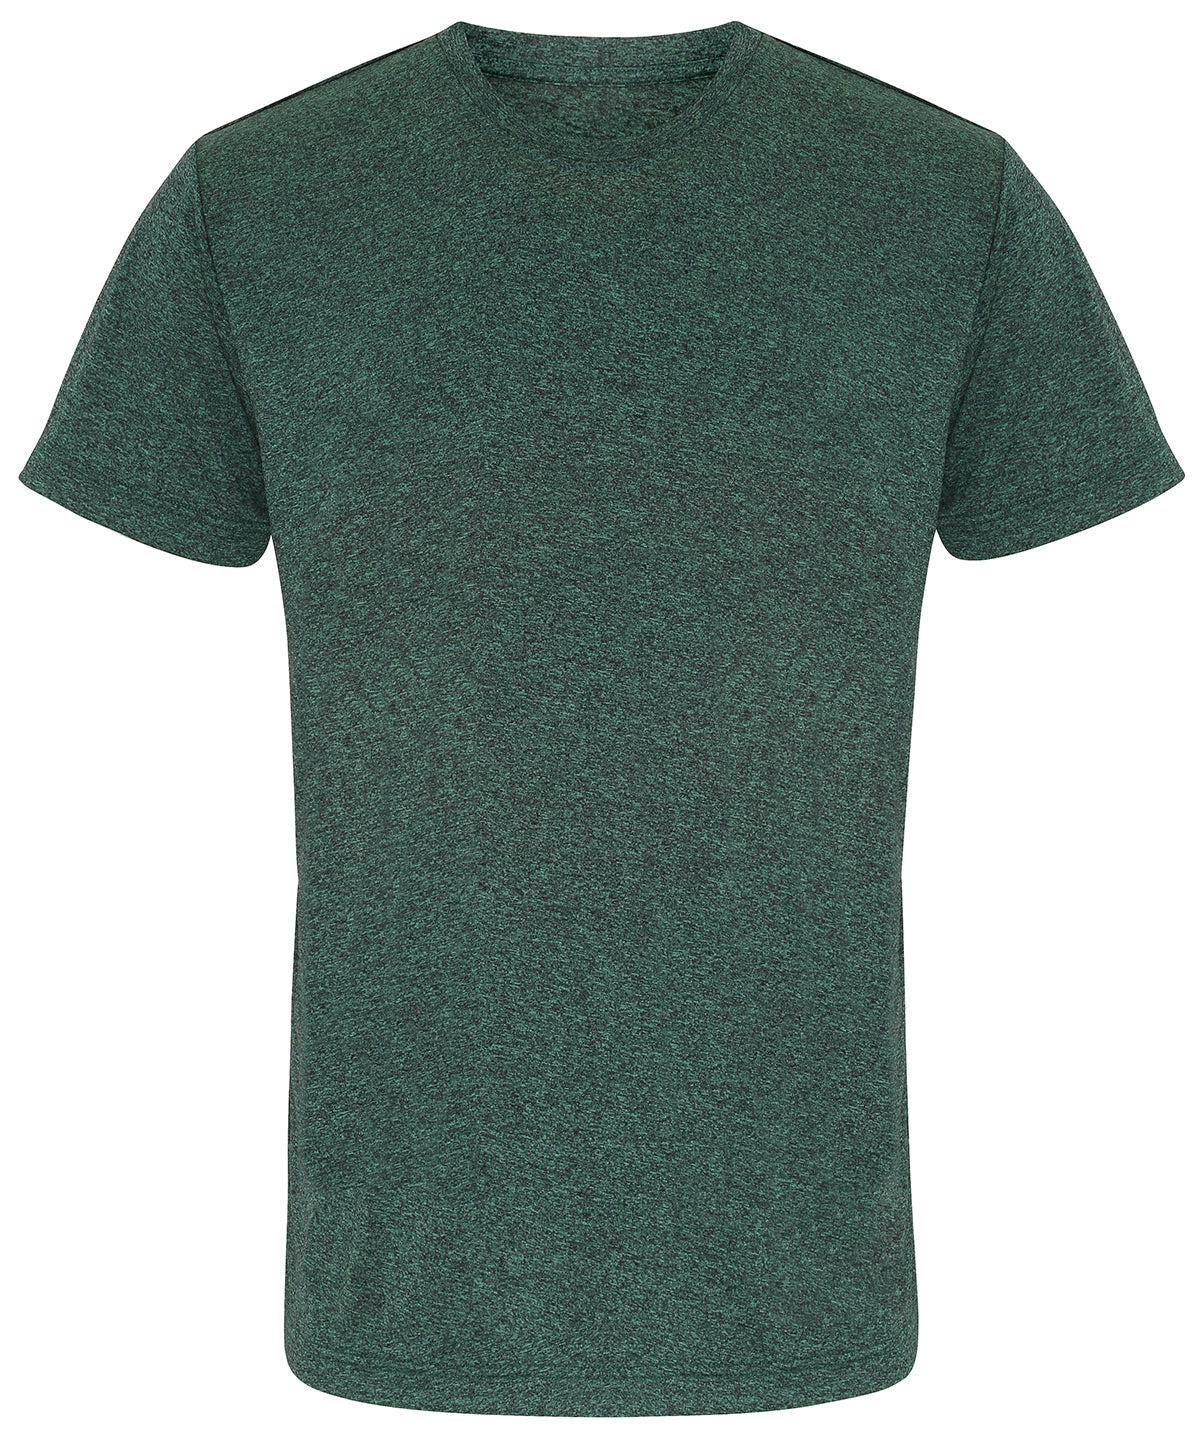 TriDri Performance T-Shirt Forest Green/ Black Melange